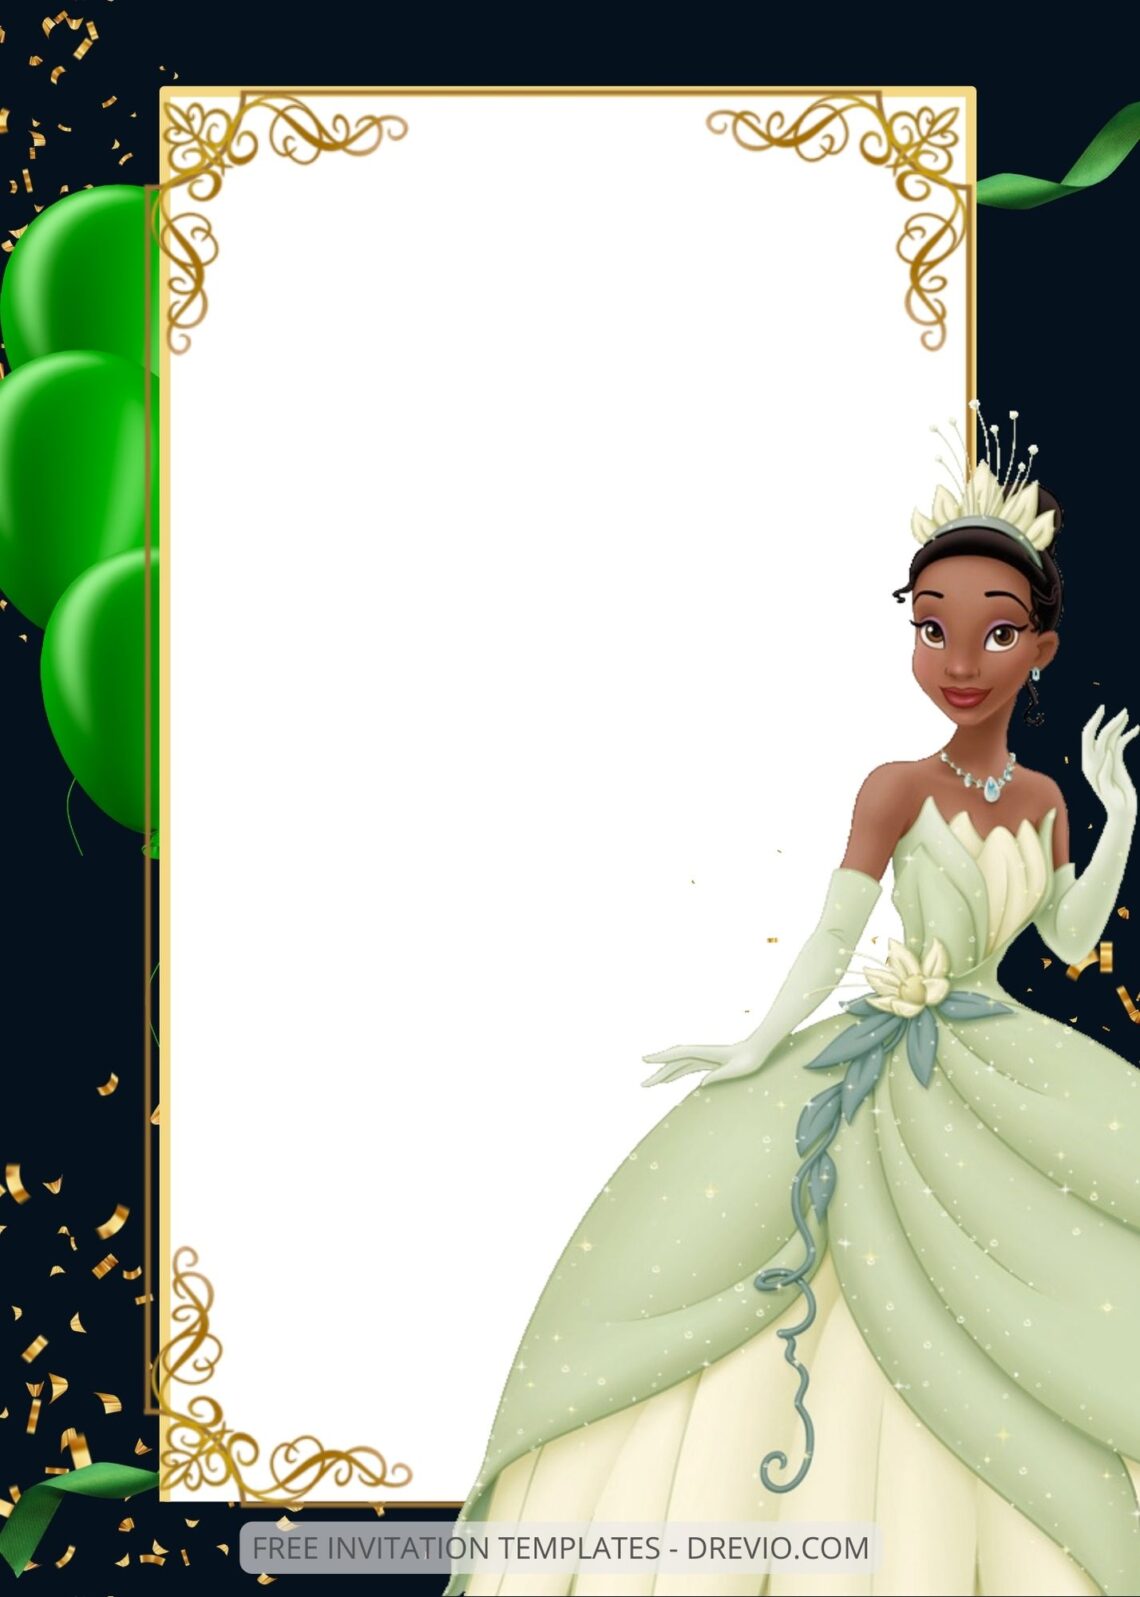 FREE EDITABLE - 9+ Princess Tiana Canva Birthday Invitation Templates Seven